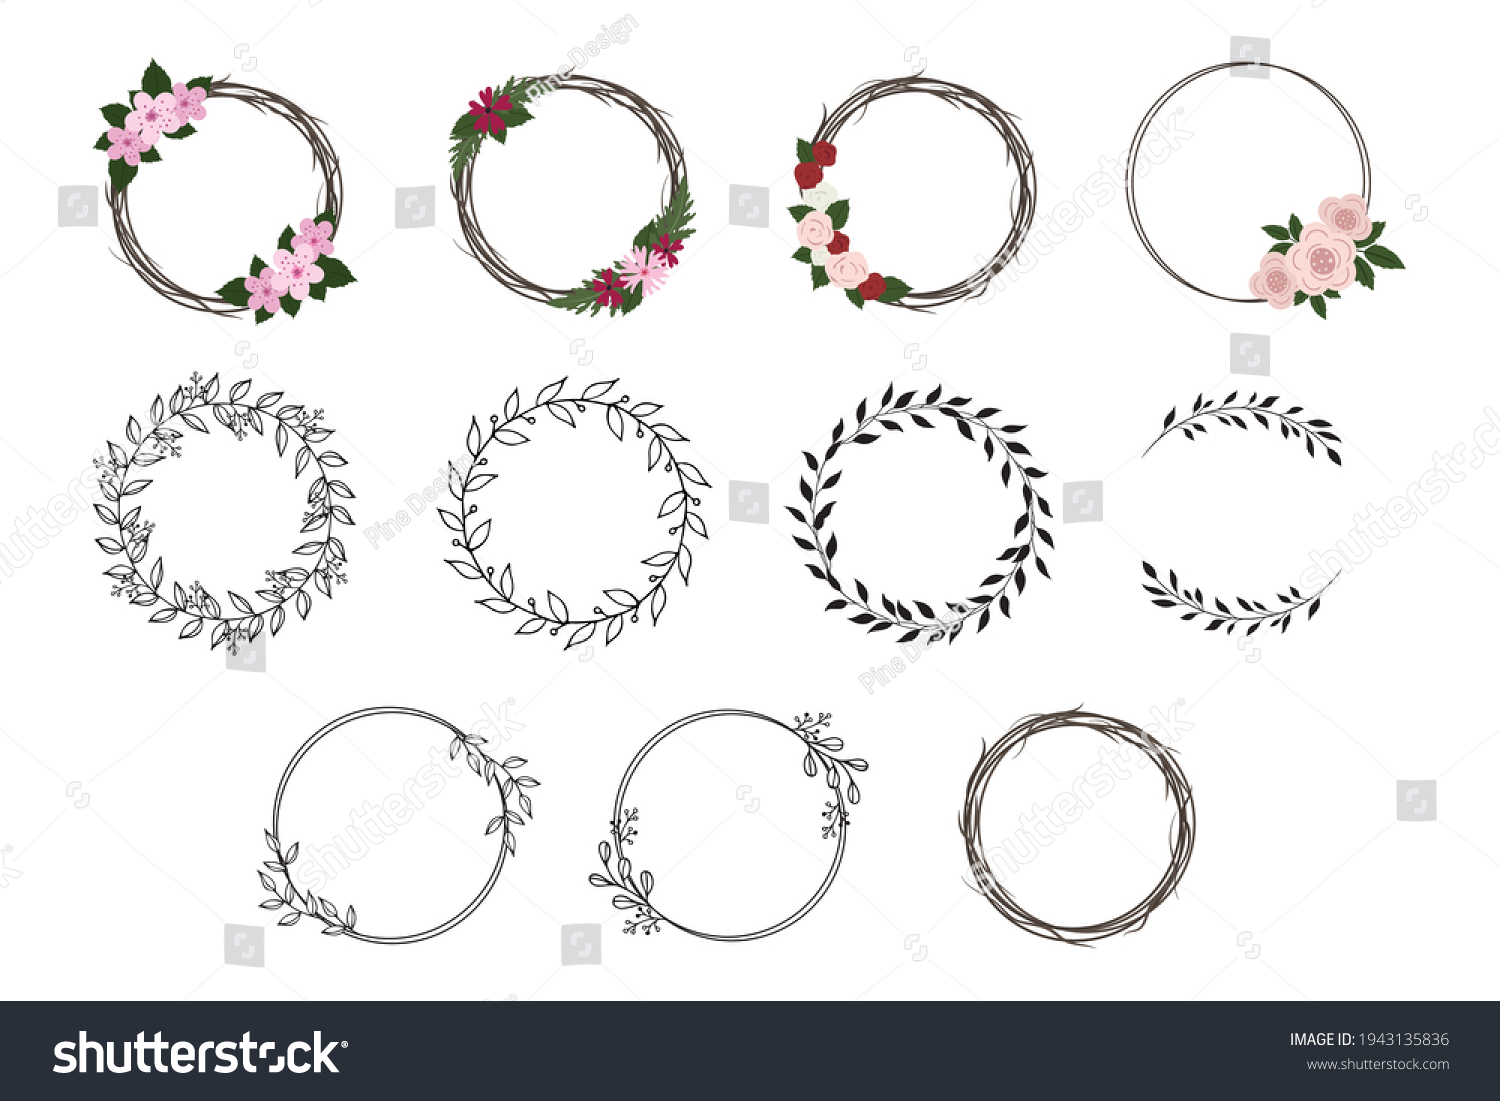 SVG of Decorative Wreath Vector Illustration Set. Wedding invitation elements, floral wreath, round border, circle. svg